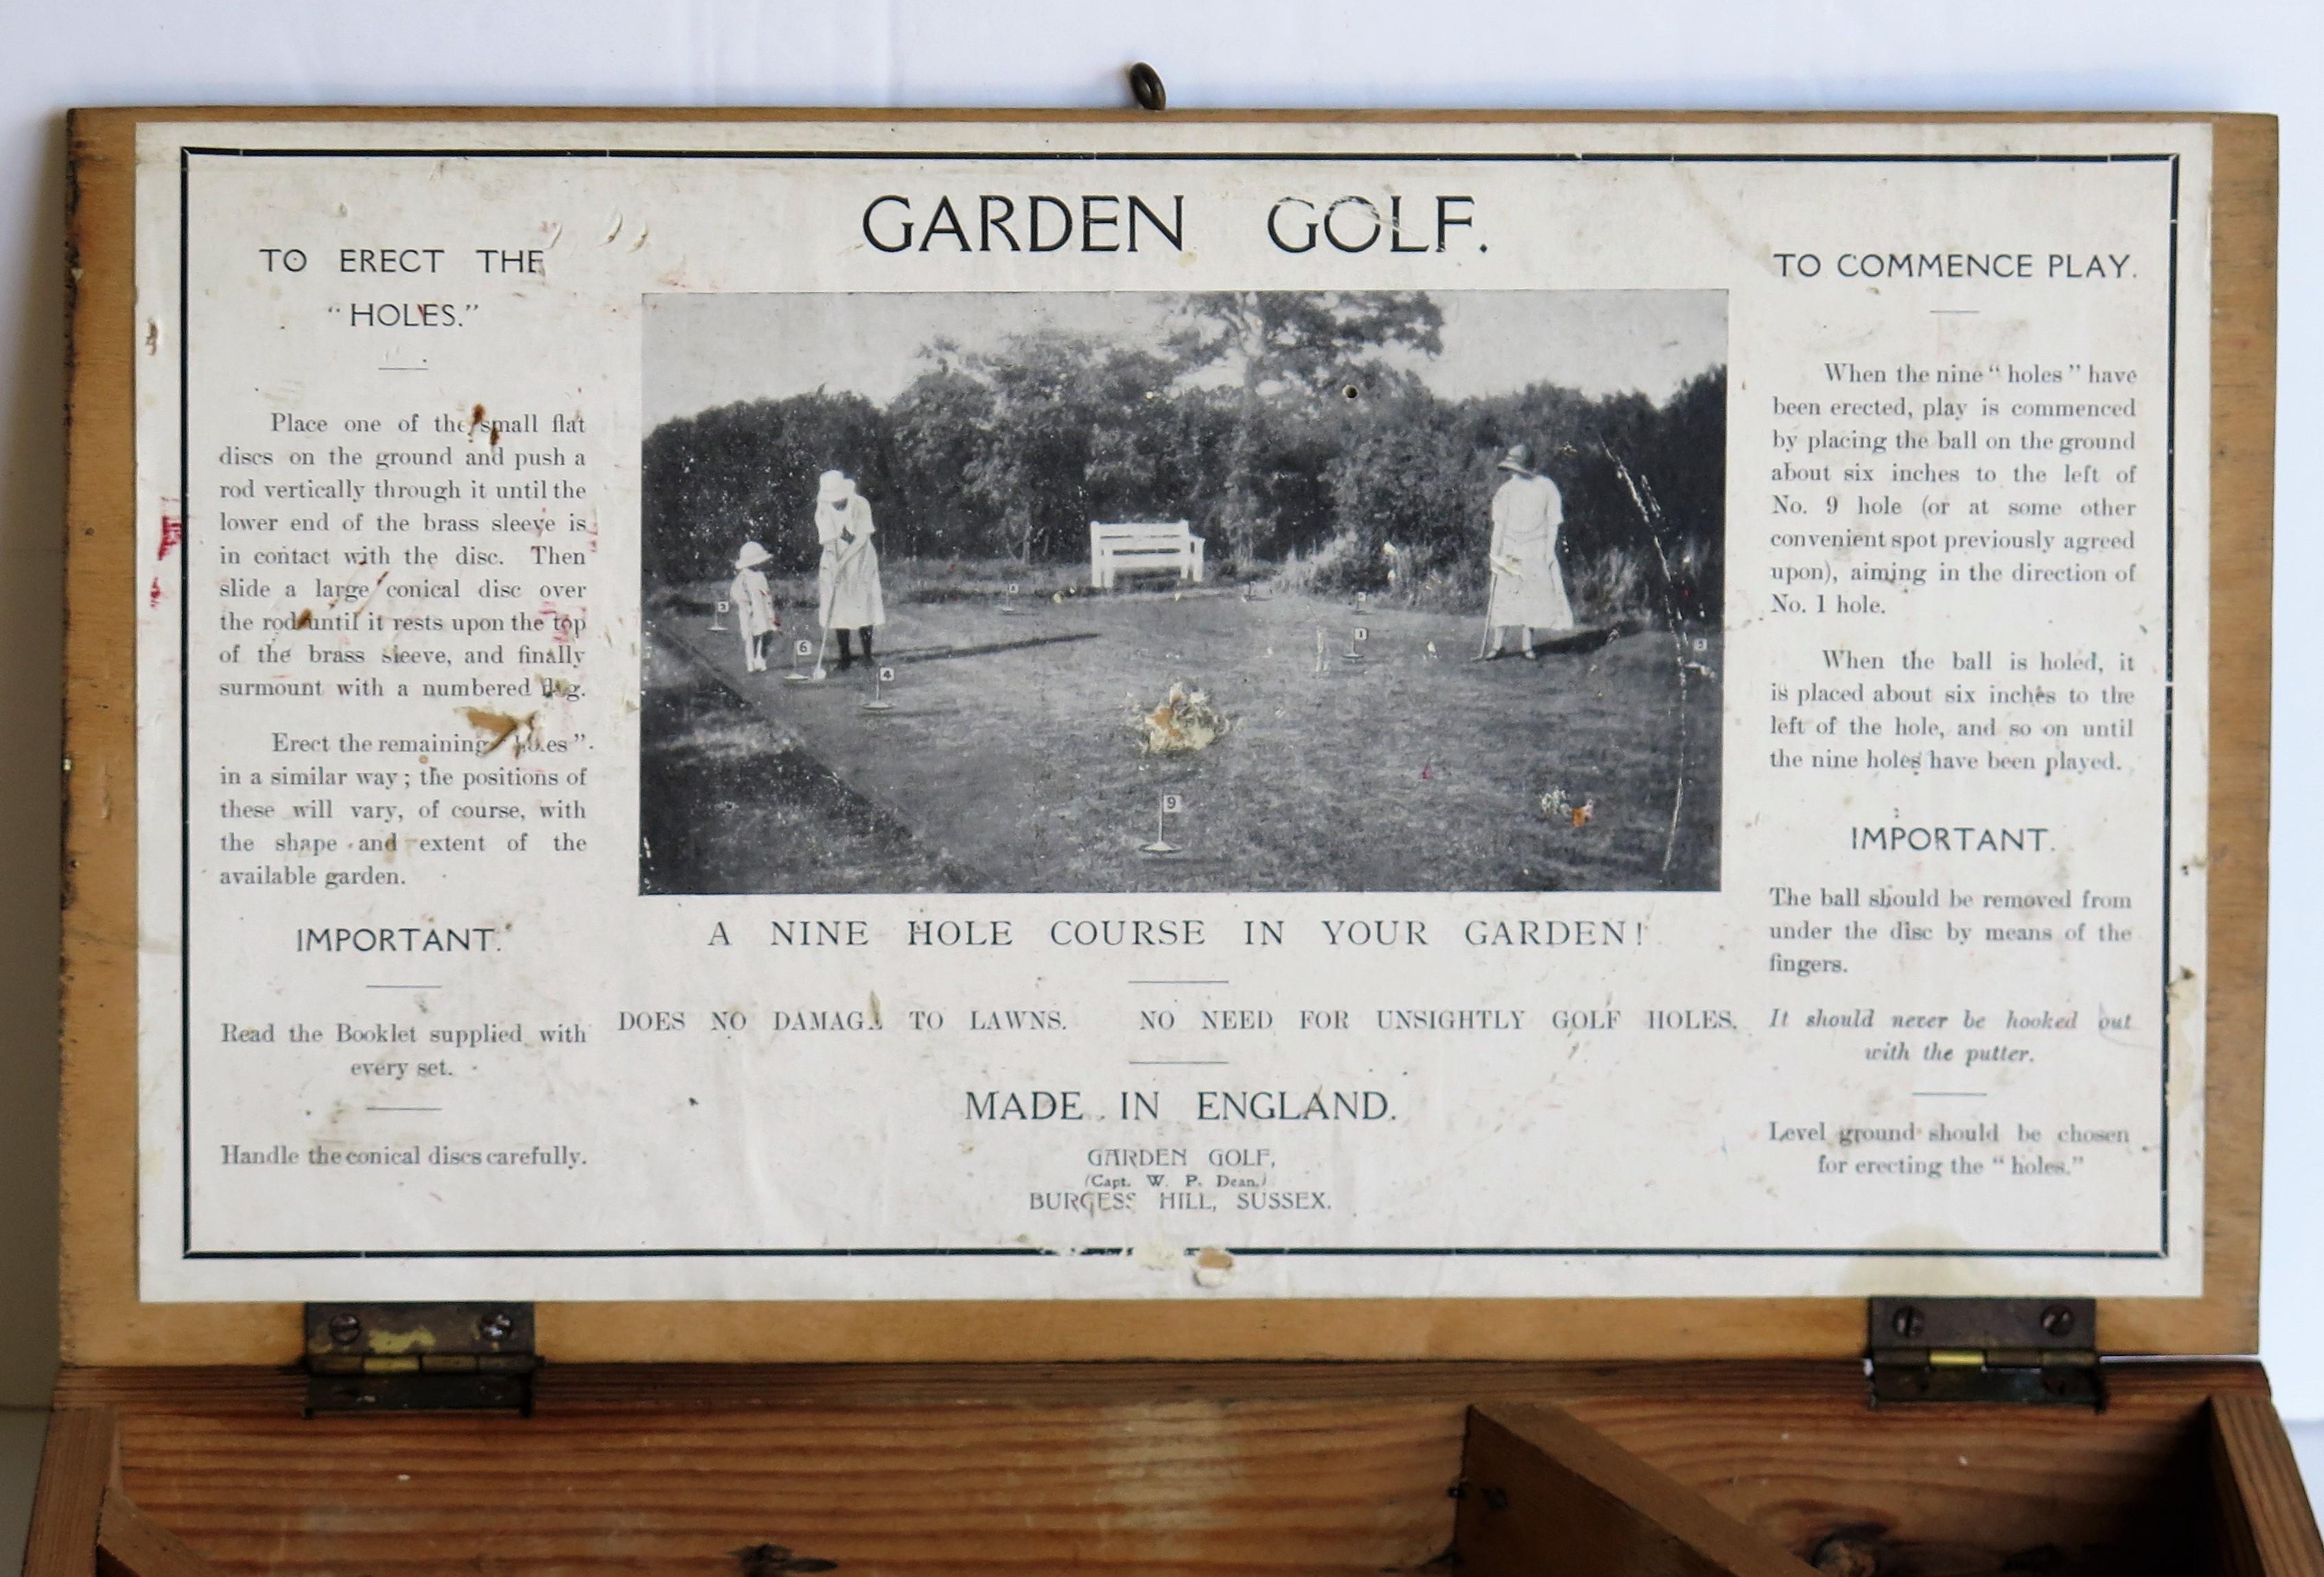 Folk Art Garden Golf Game 9 Hole Set in Lidded Wood Box, Early 20th Century